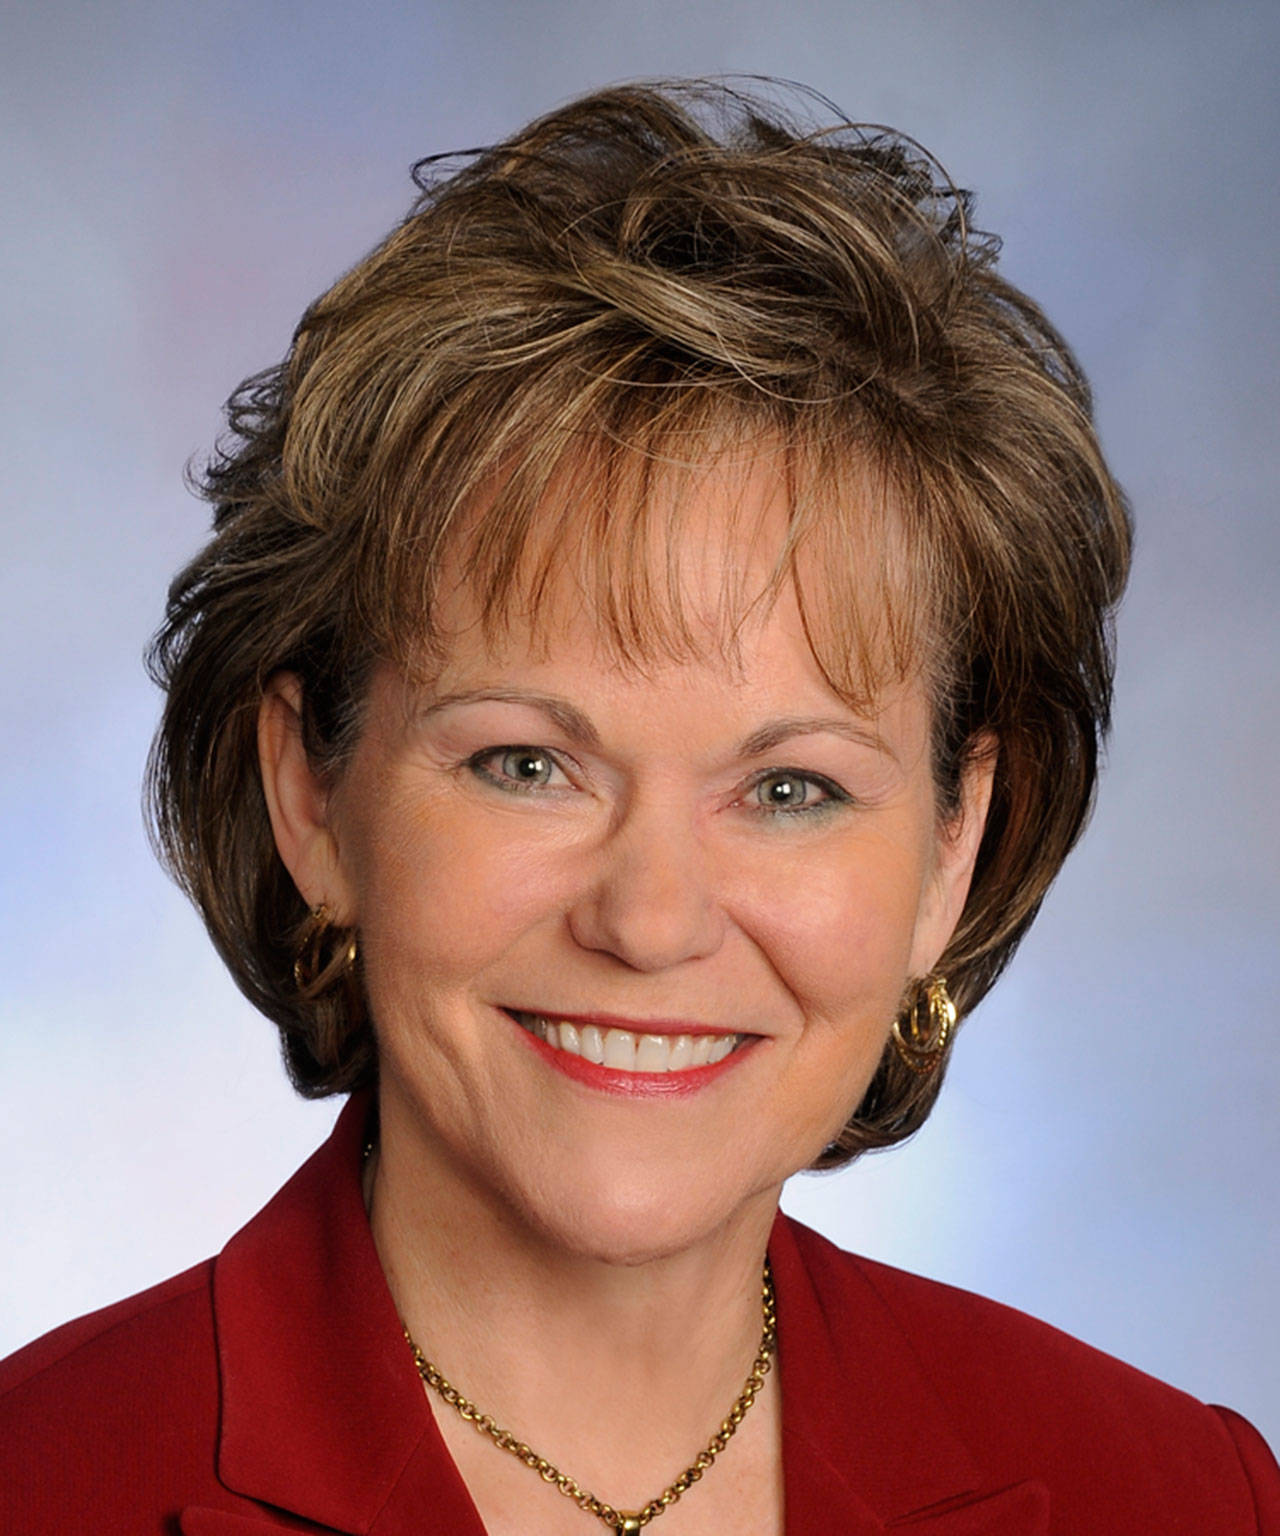 Metropolitan King County Council Vice Chair Kathy Lambert. Image courtesy of King County